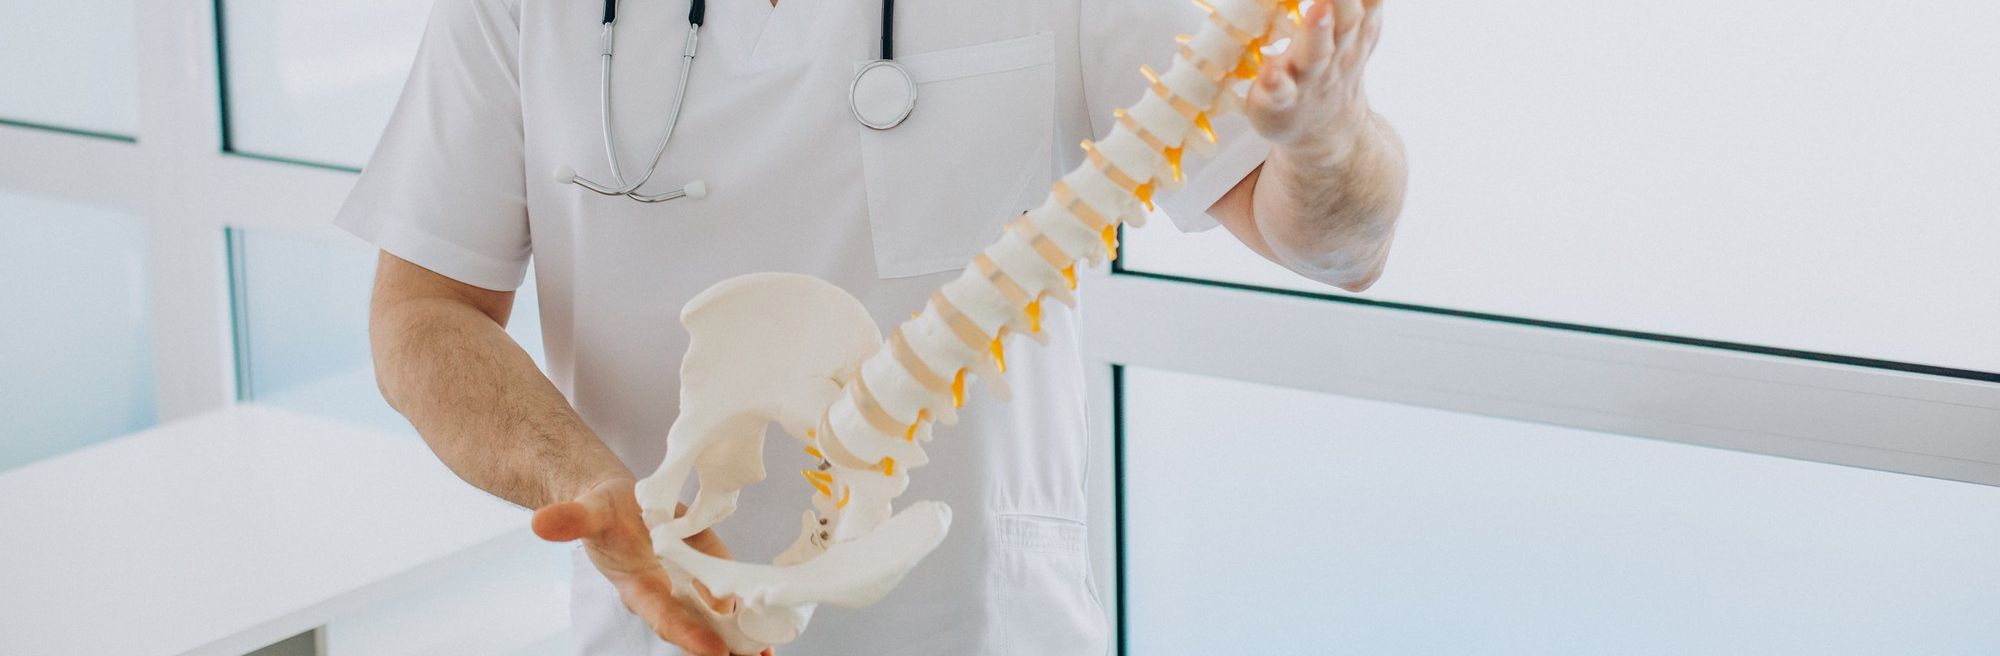 Fizioterapeut u rukama drži model kralježnice s intervertebralnim diskovima